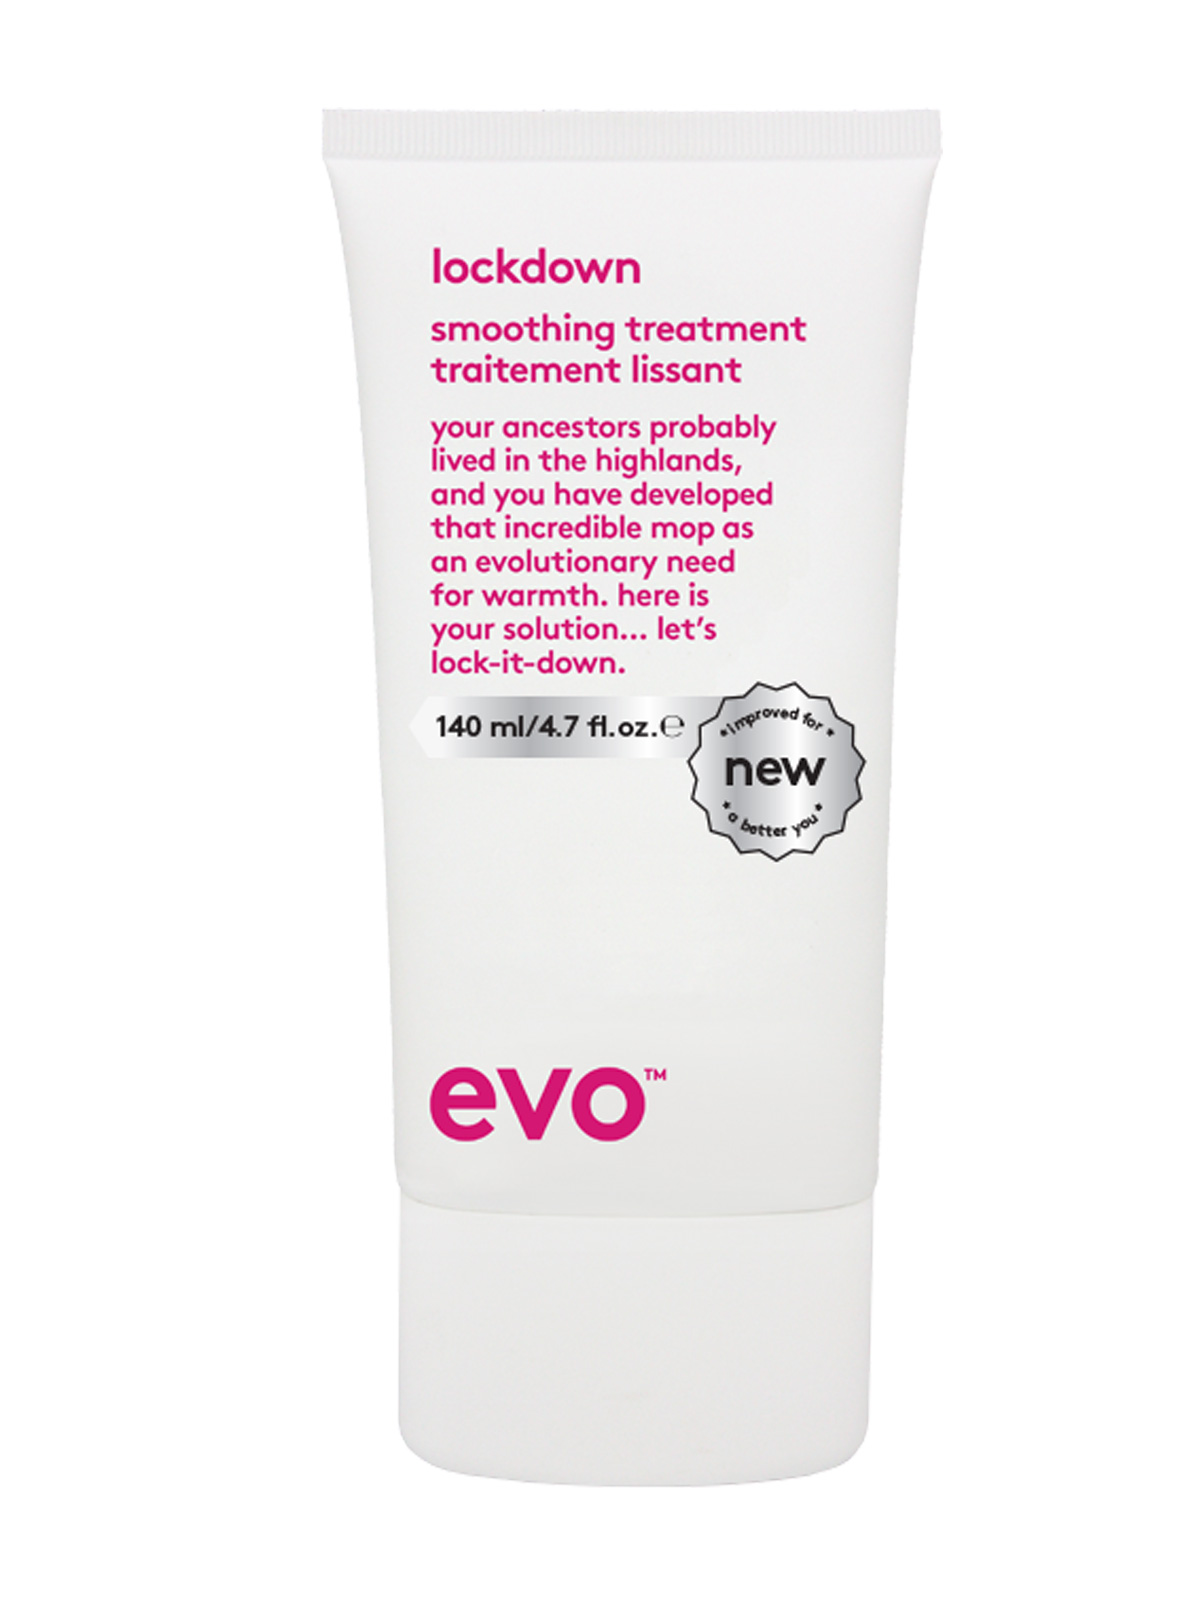 EVO Lockdown Smoothing Treatment